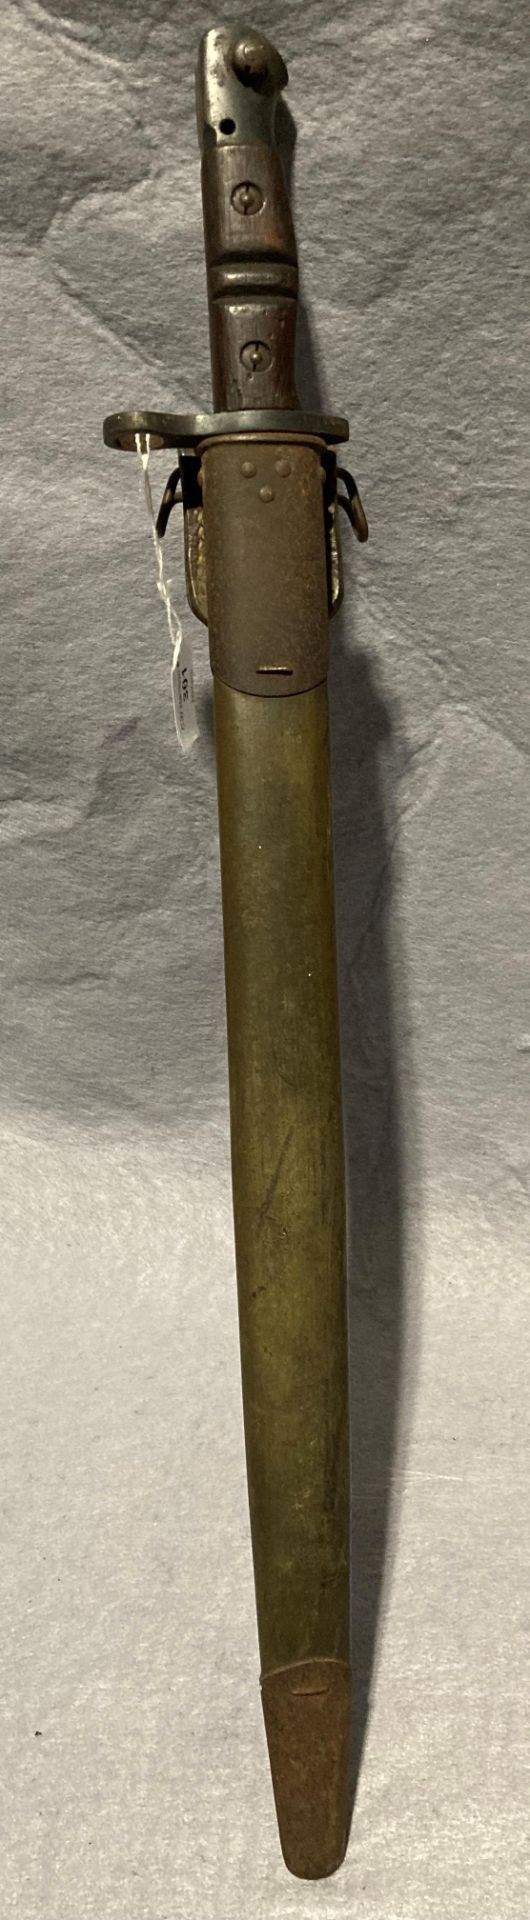 1918 US military Remington bayonet with original sheath, blade 32. - Image 2 of 6